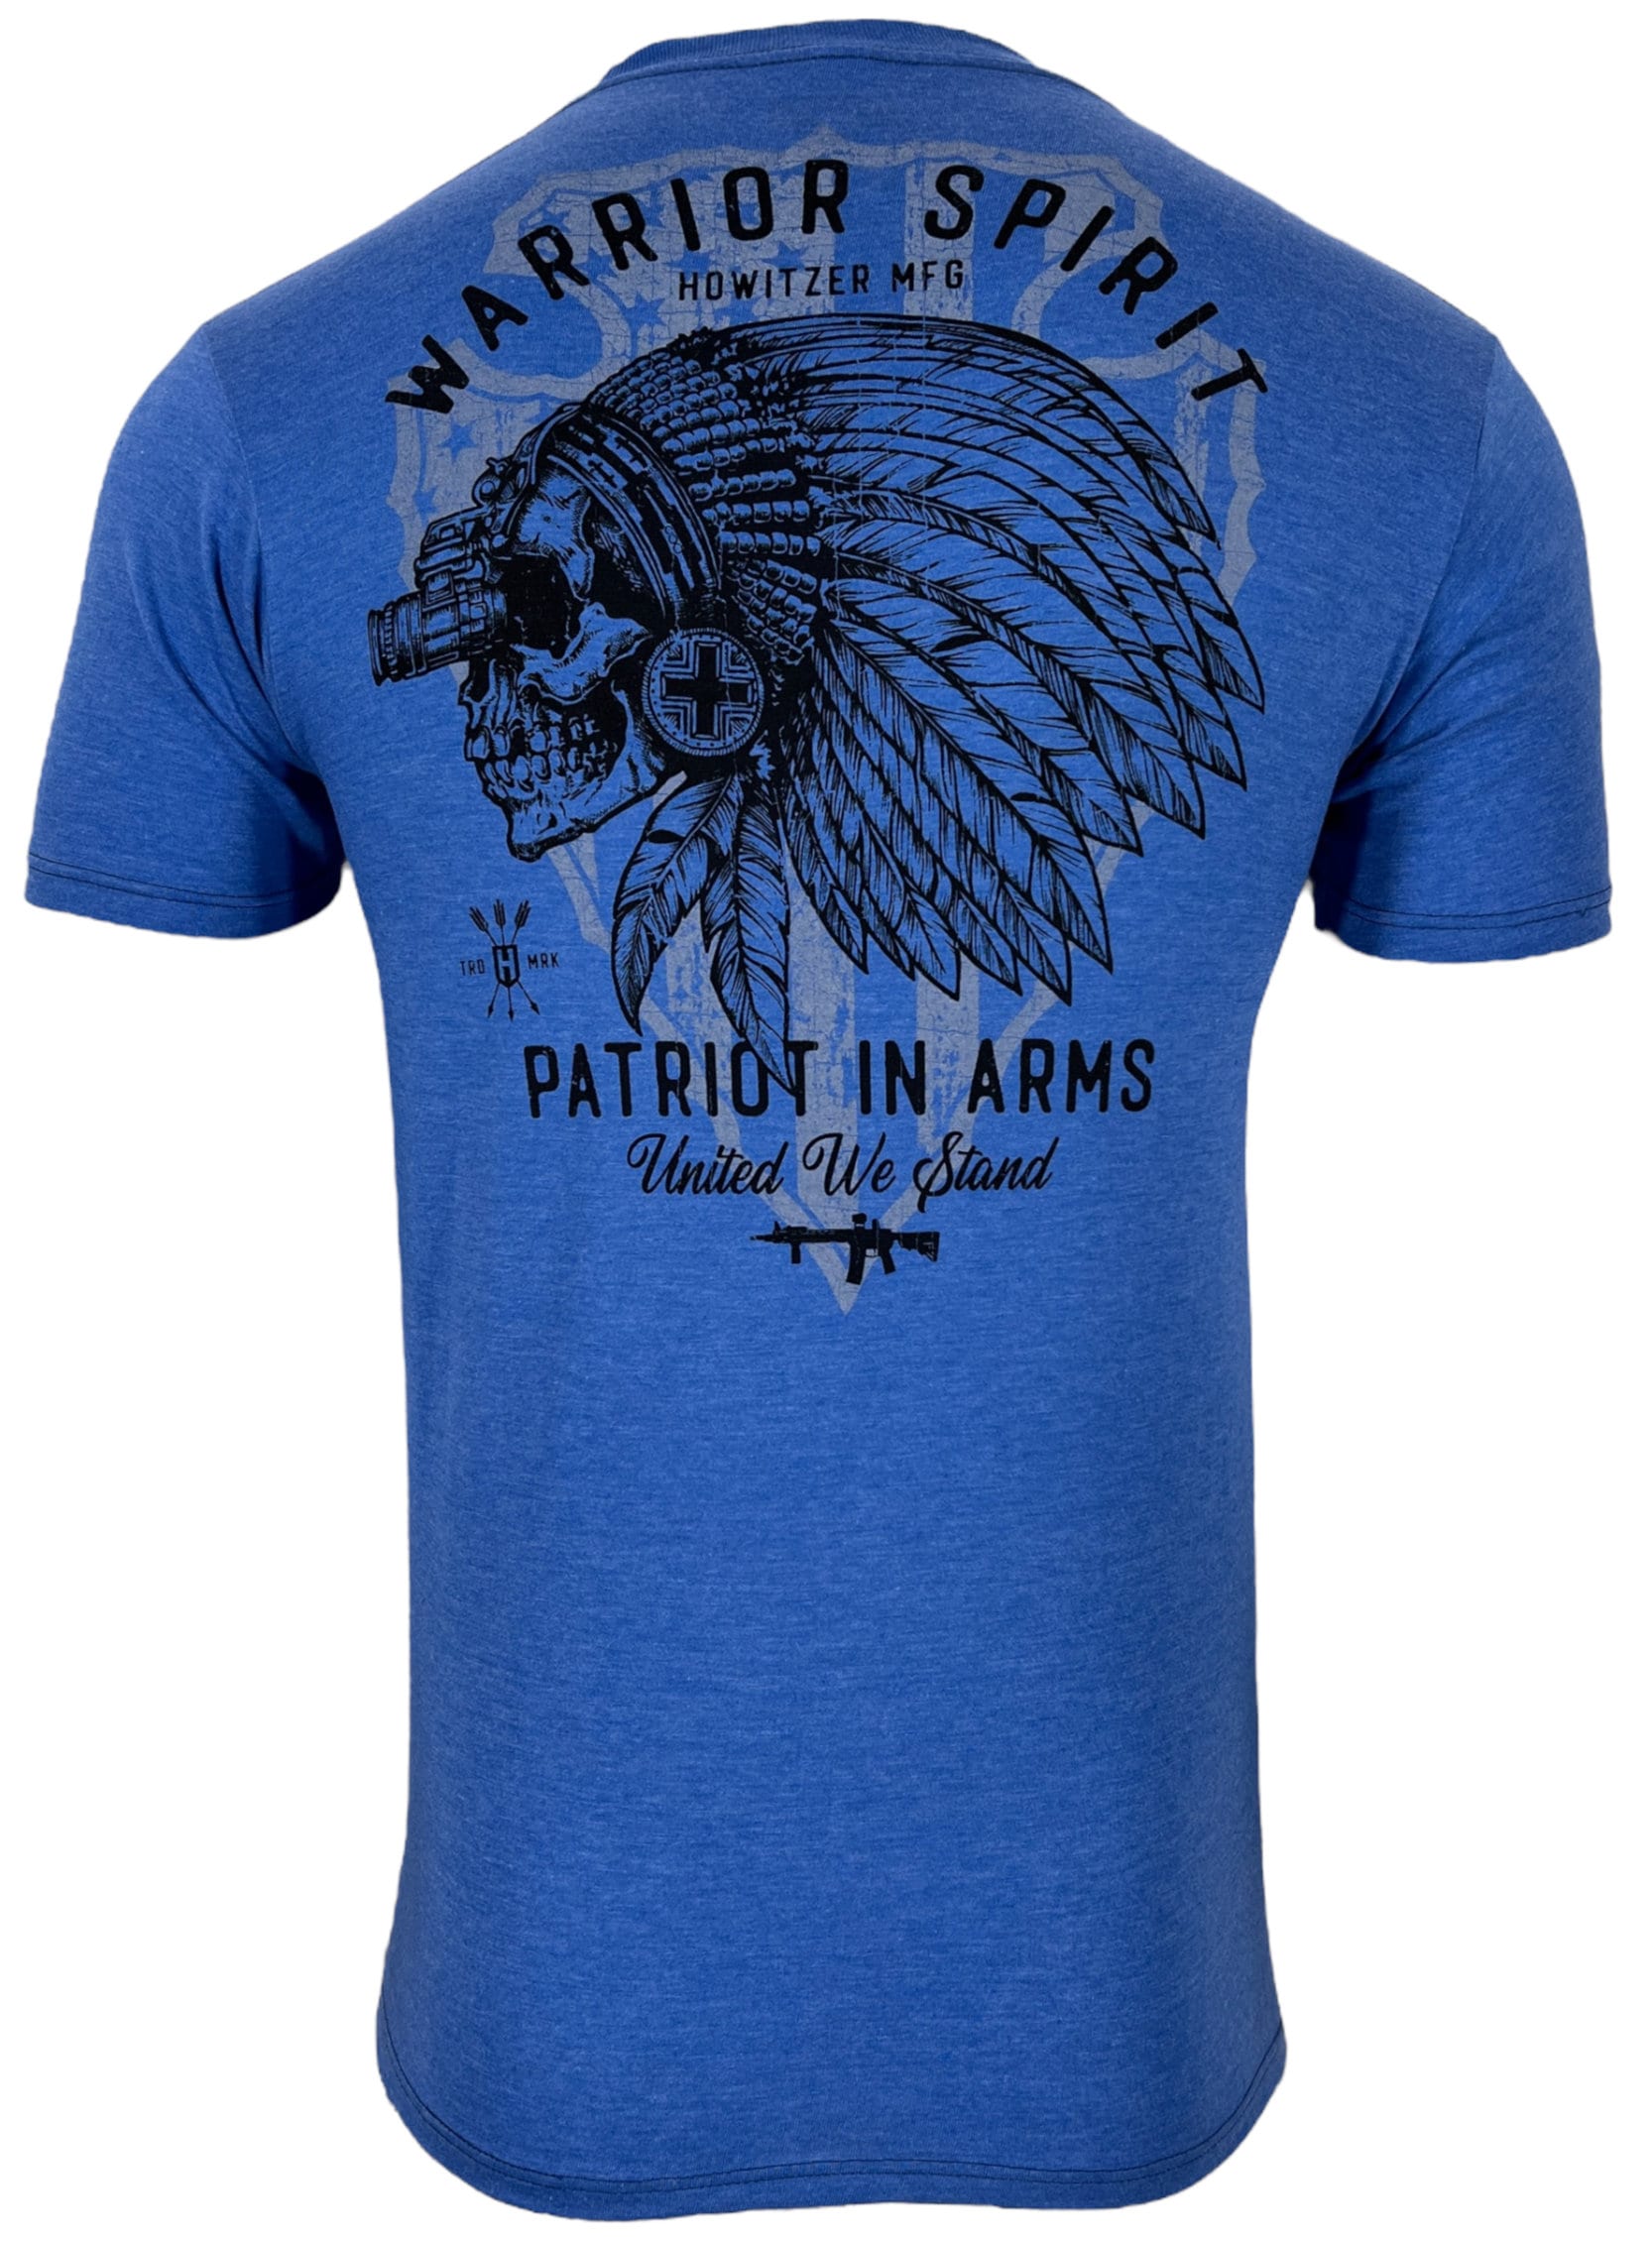 Discover Howitzer Style Men's T-Shirt PATRIOT WARRIOR Military Grunt MFG *